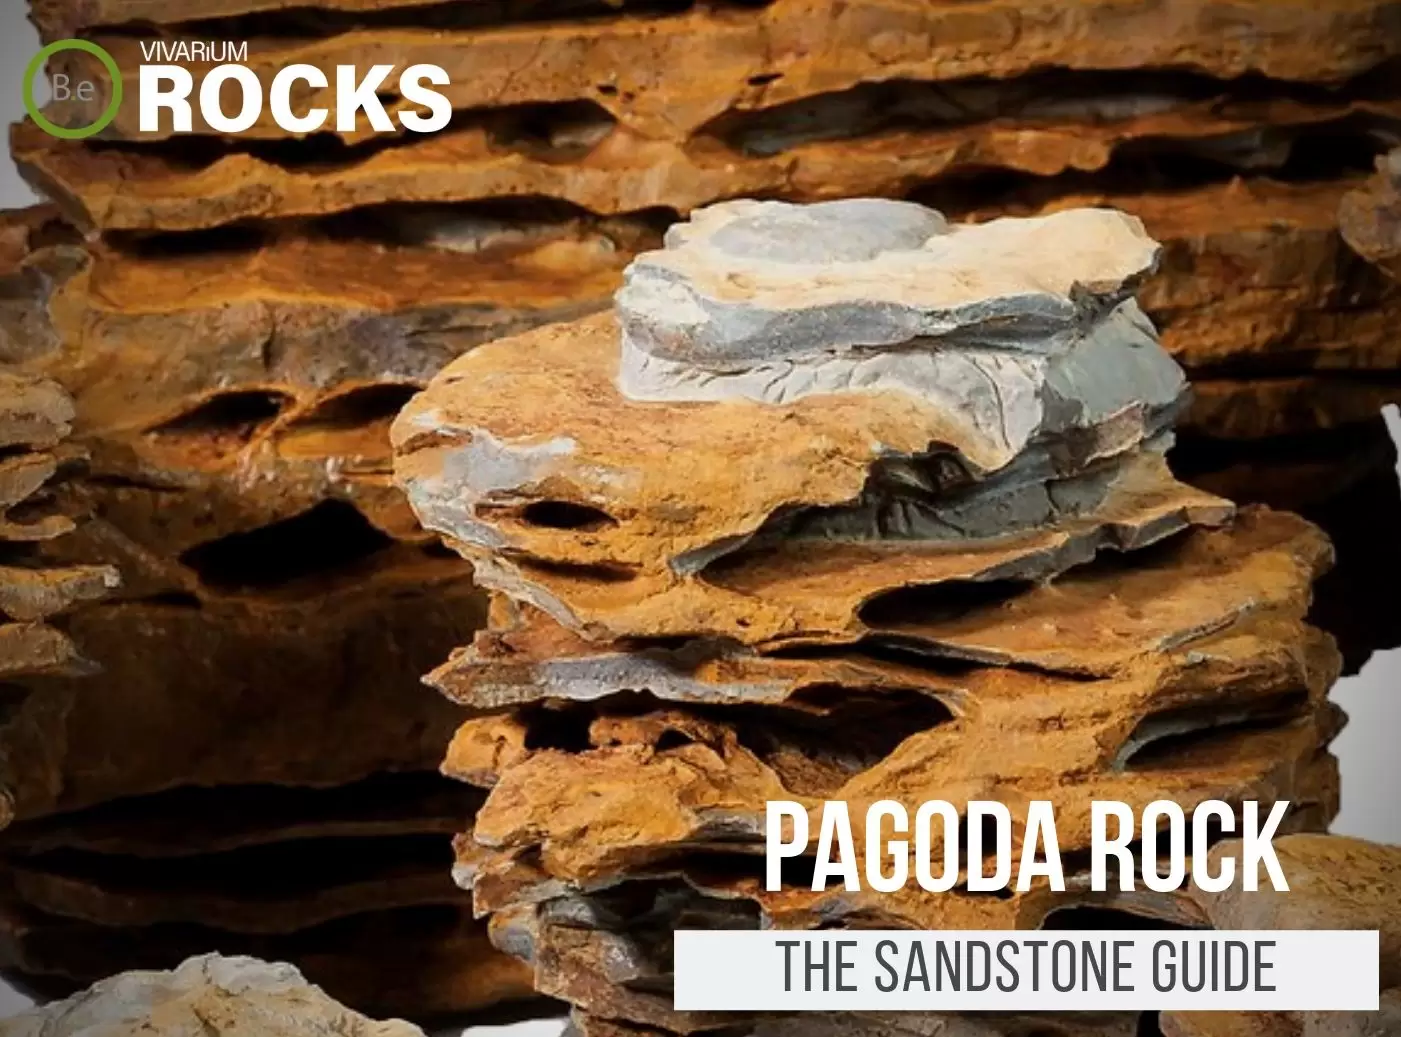 Pagoda Rock "Sandstone" Hardscape Guide